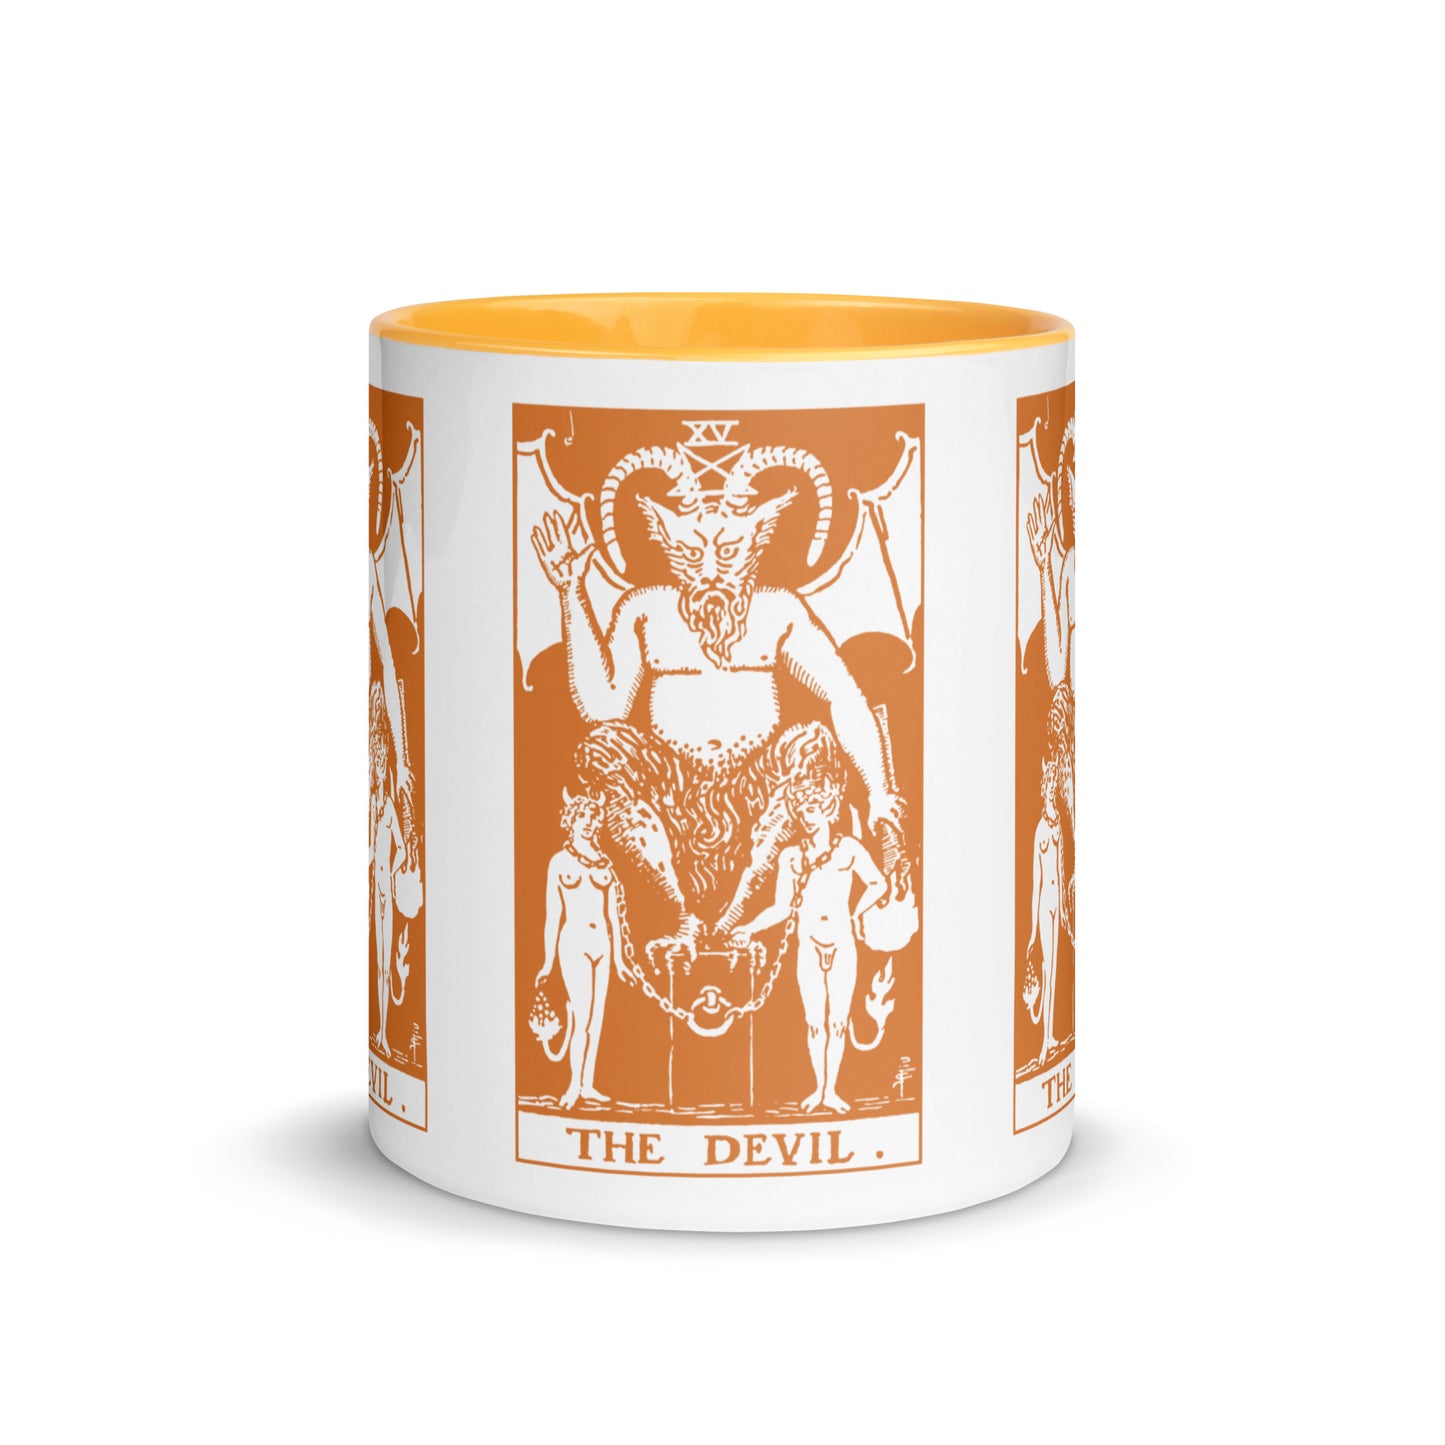 The Devil Card Coffee Mug